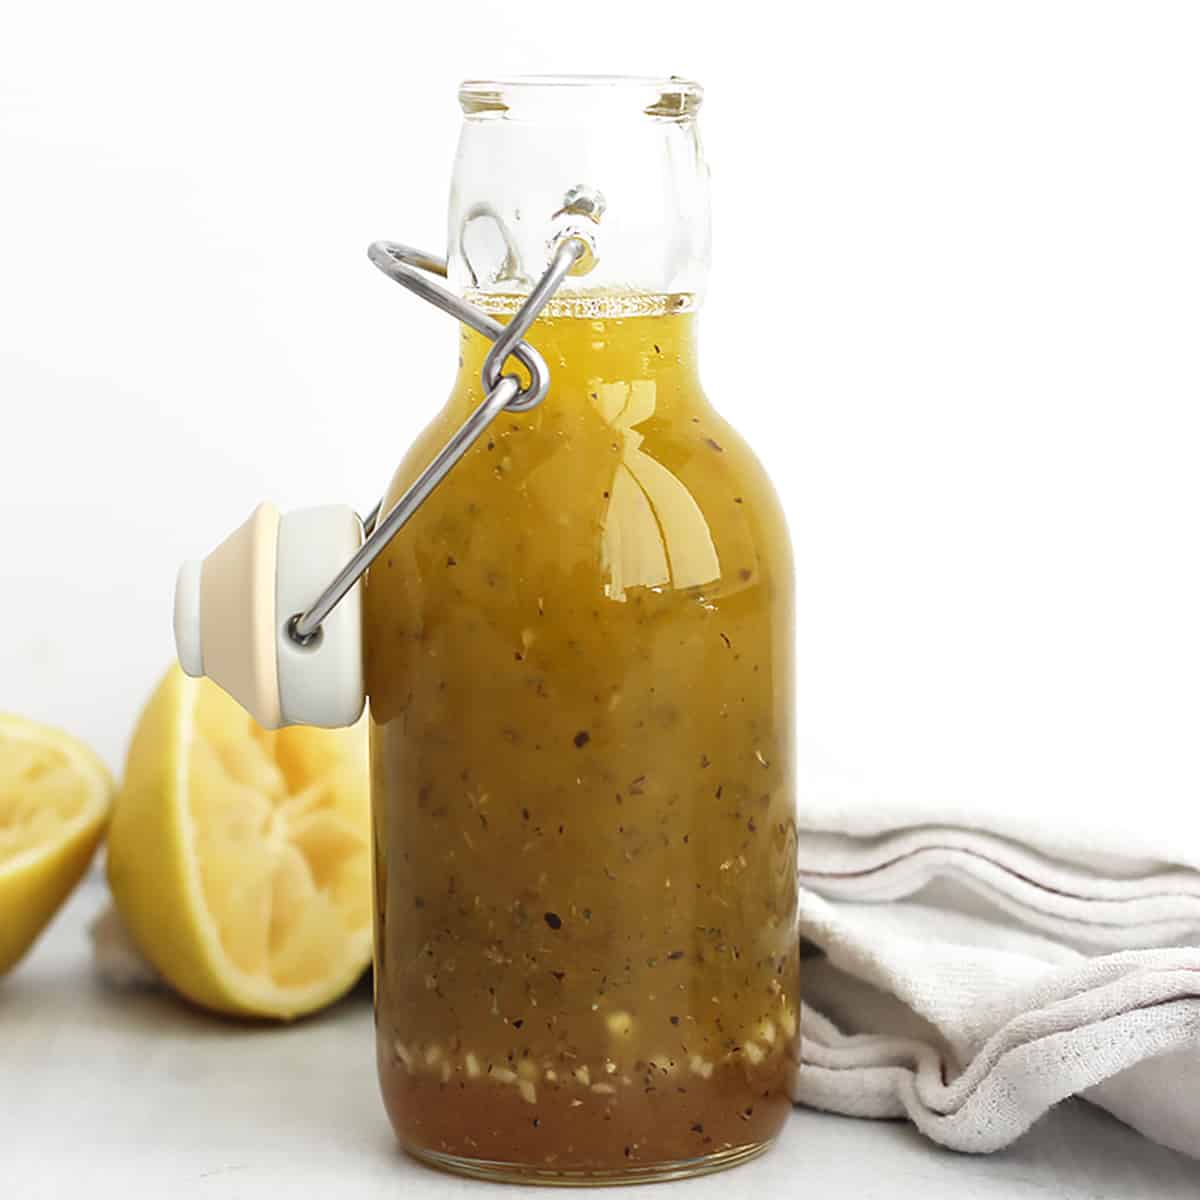 Honey lemon dressing in a sealable glass jar next to squeezed lemon halves.